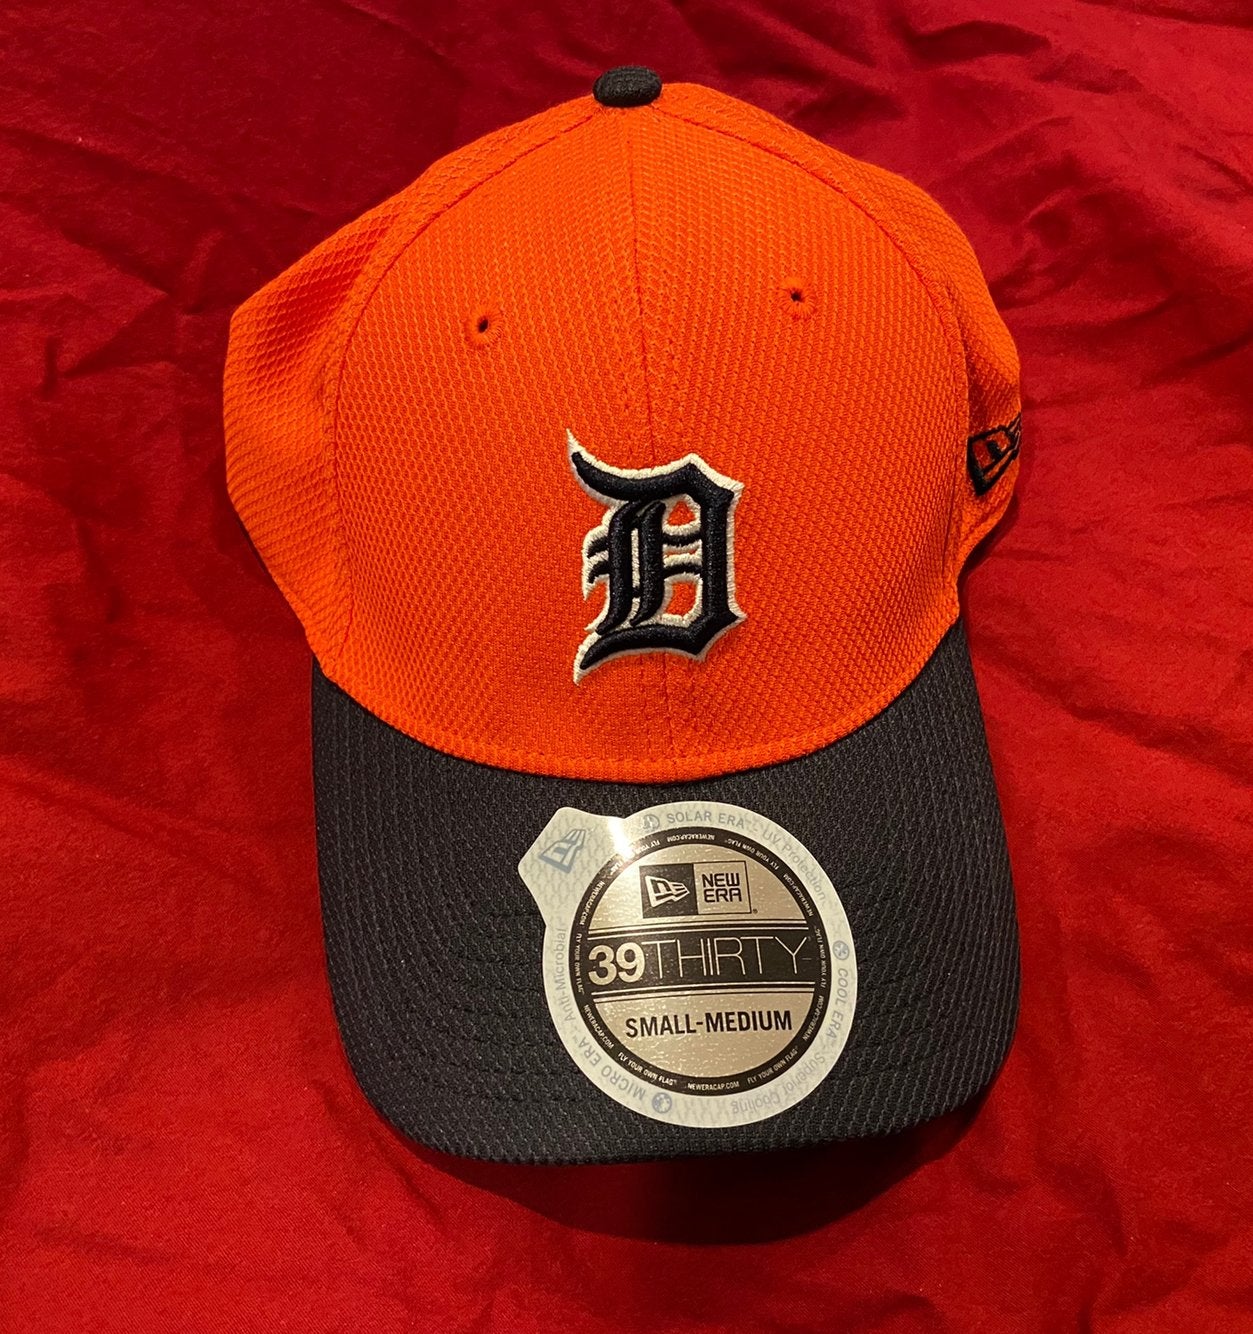 Detroit Tigers T Shirt Genuine Merchandise Baseball Medium M